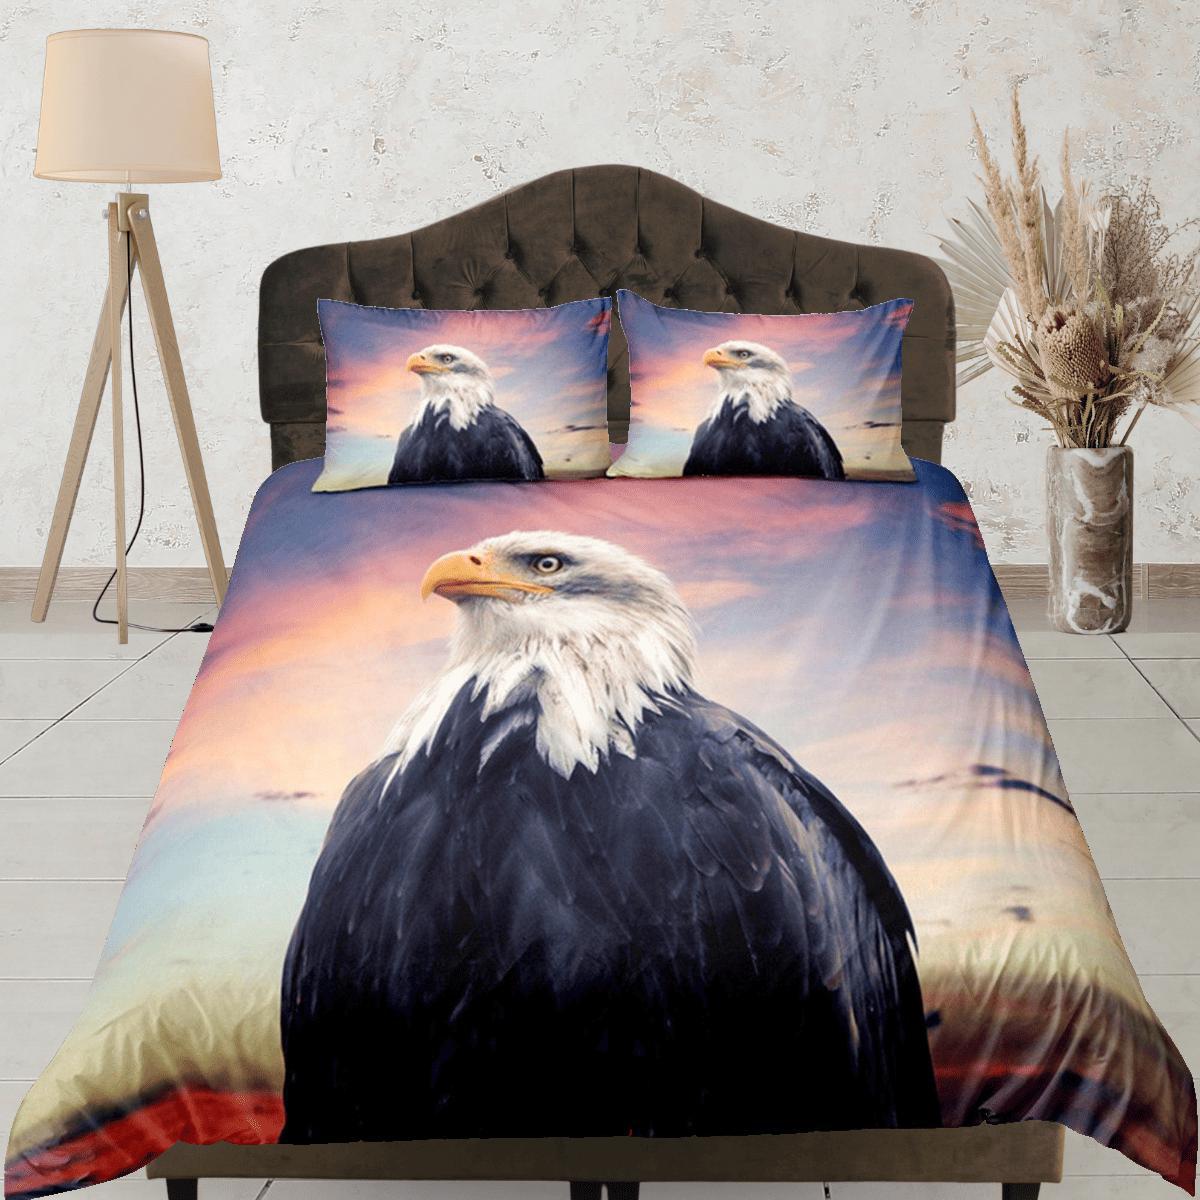 daintyduvet Eagle Duvet Cover Set Cute Bedspread, Bird Dorm Bedding with Pillowcase, King Duvet Cover Full, Queen Comforter Cover Bedding